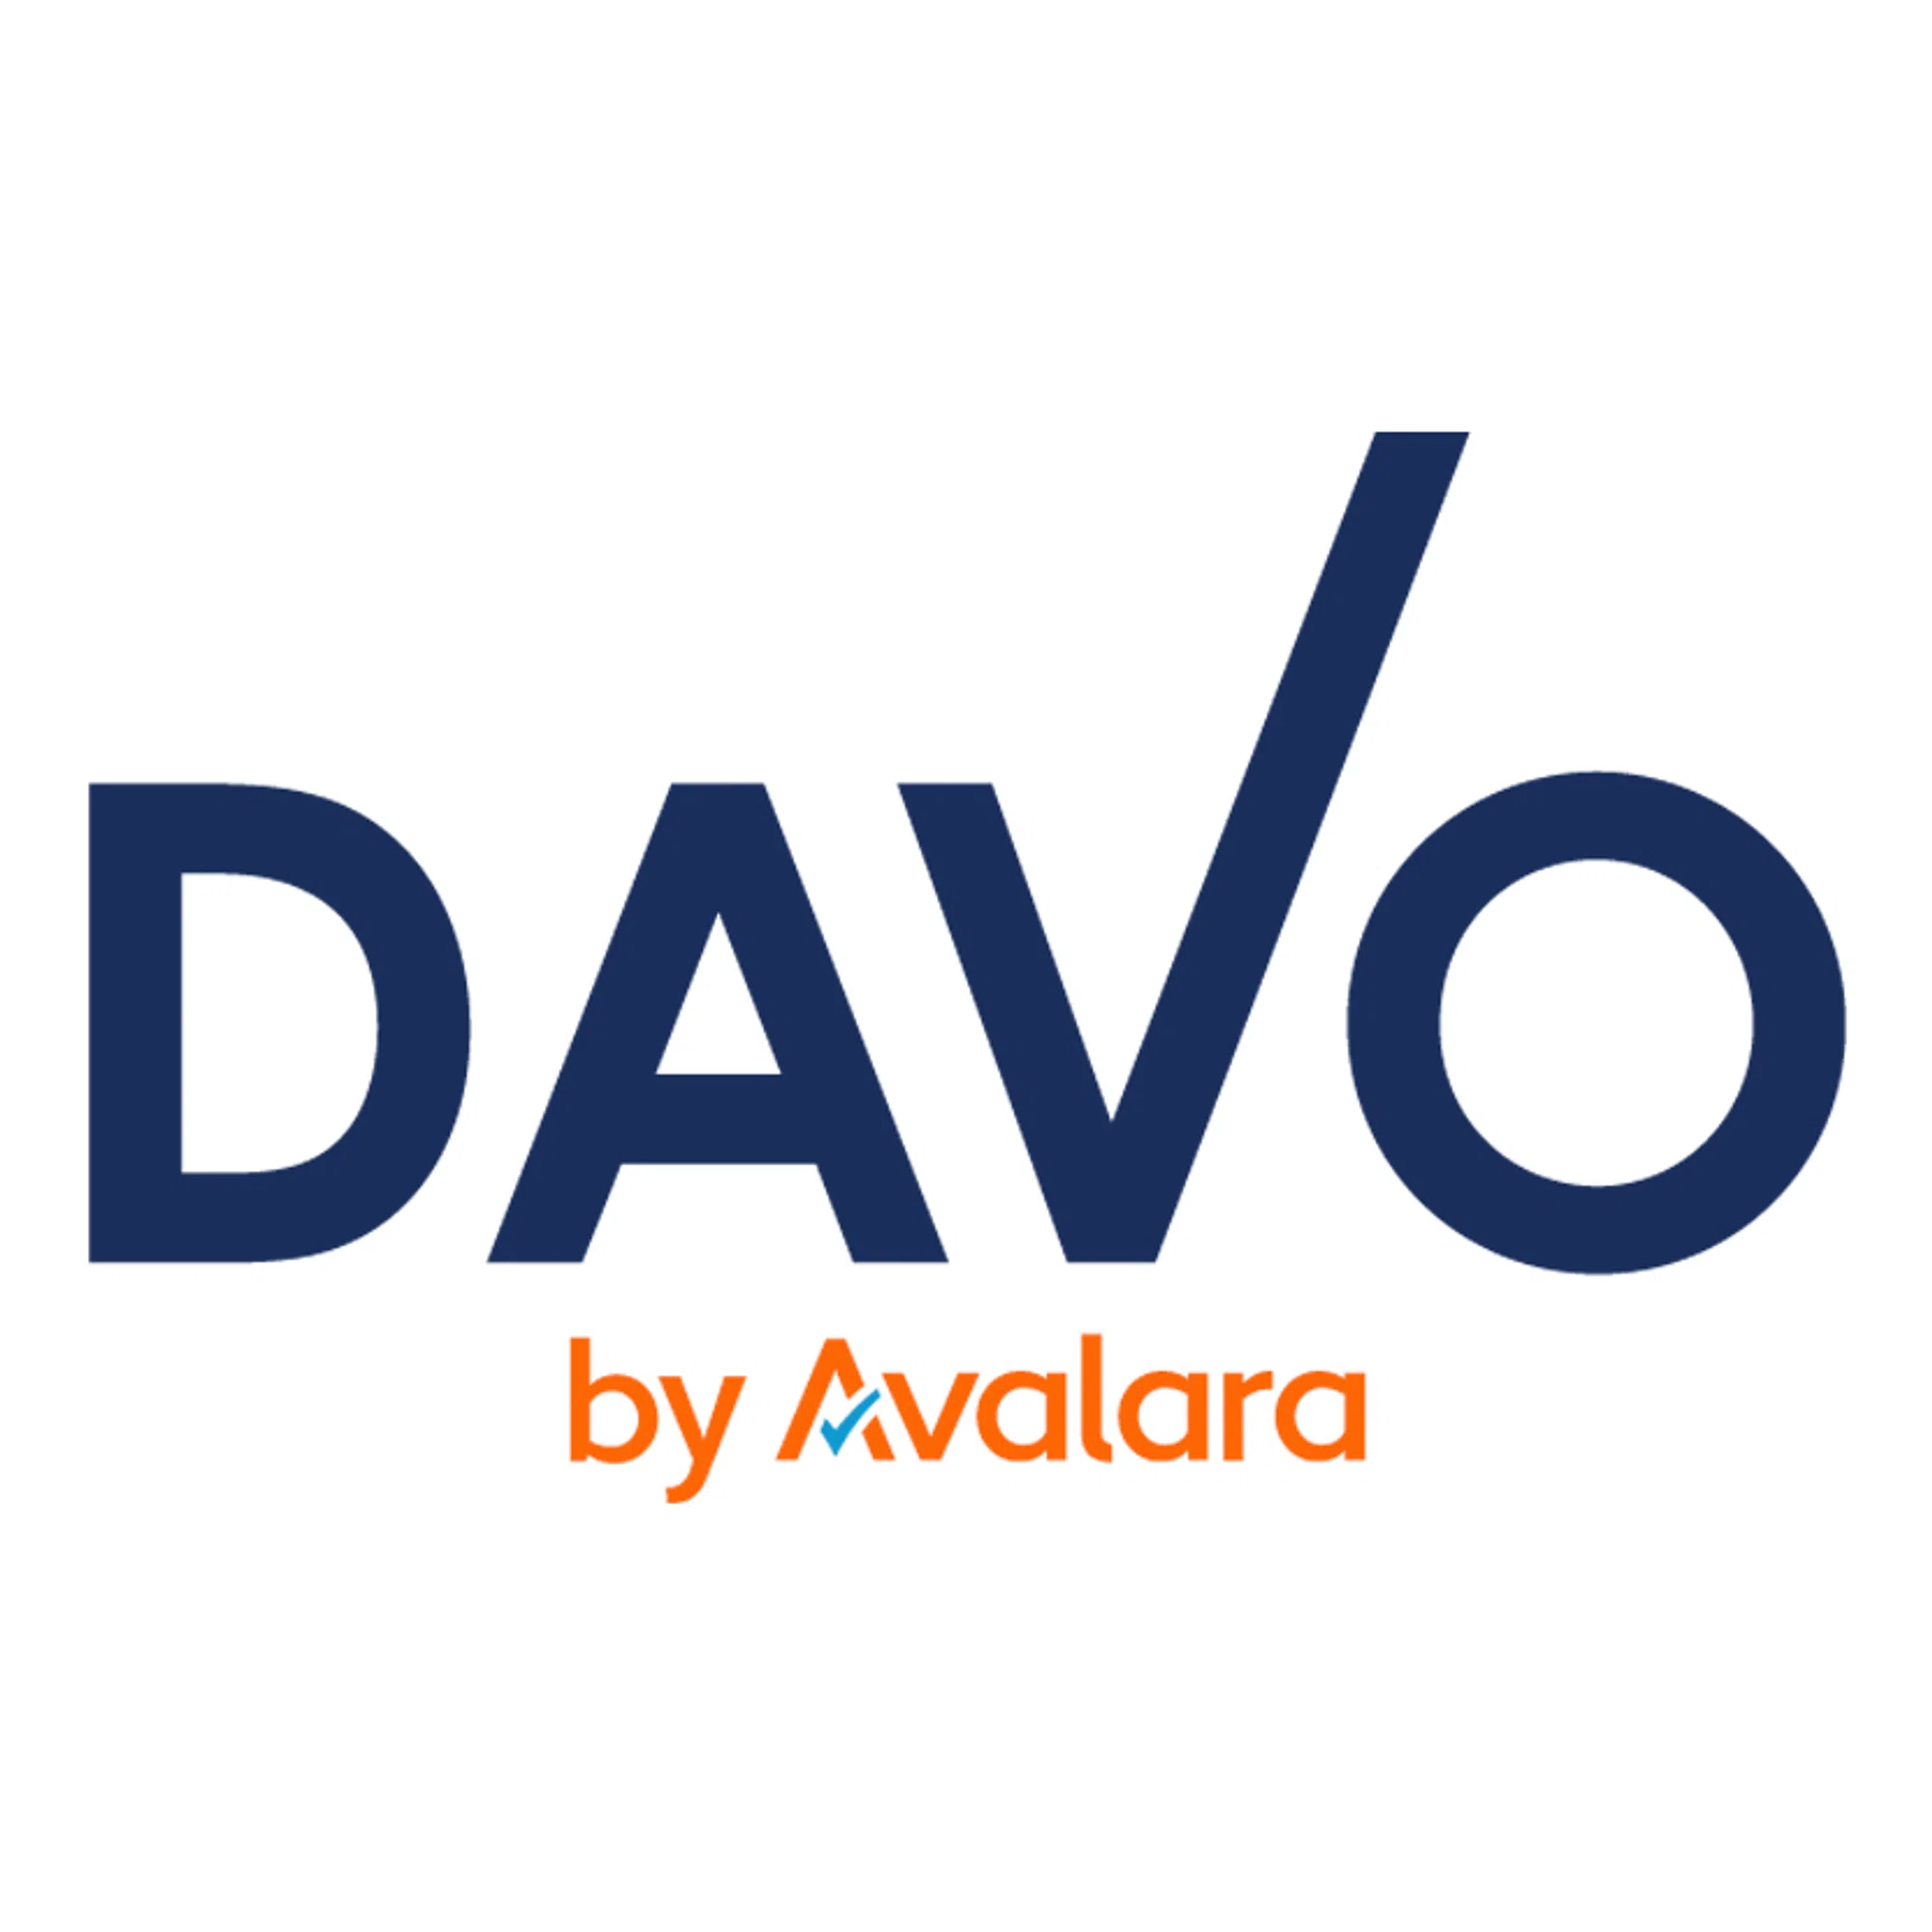 DAVO Sales Tax